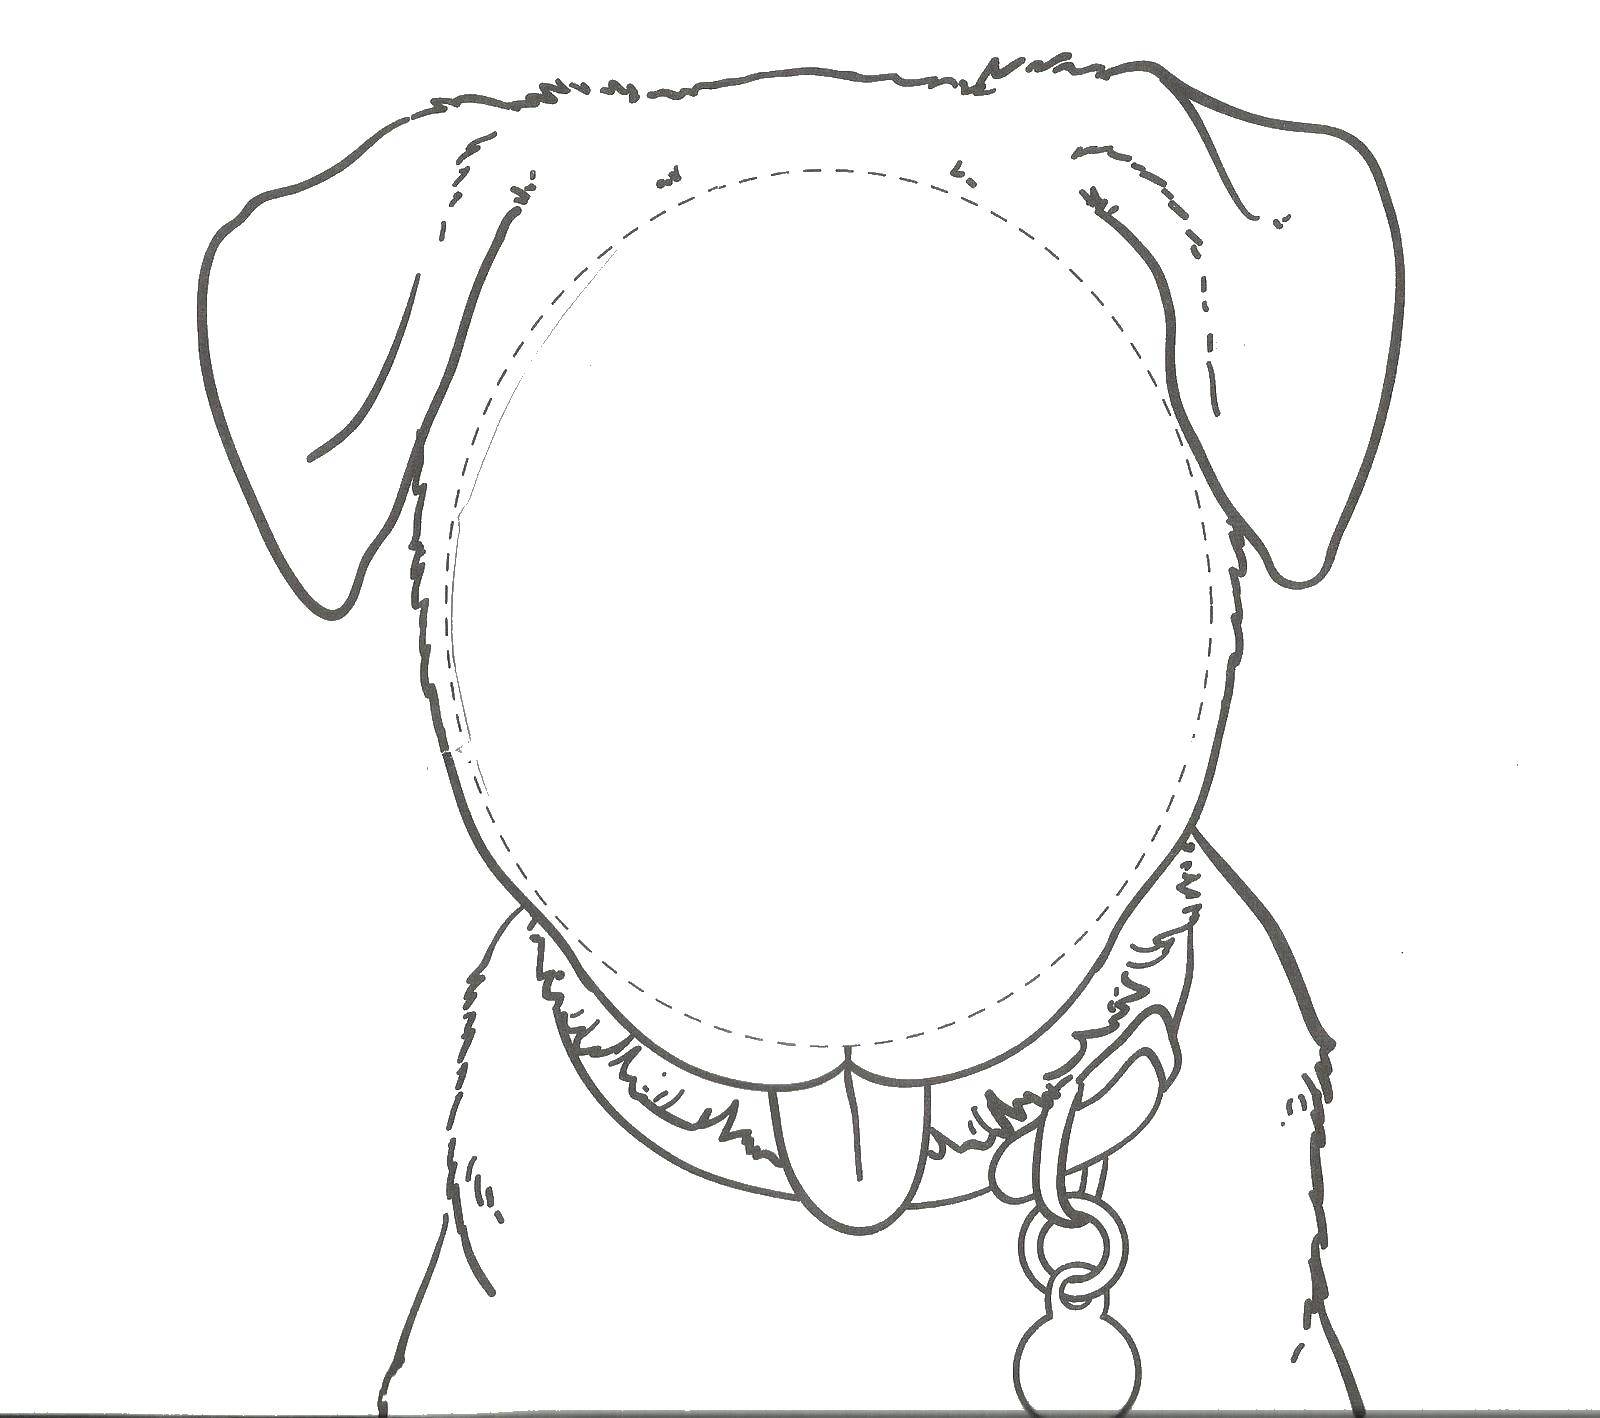 Coloring Doris dog muzzle. Category dogs. Tags:  animals, dog, puppy, dog.